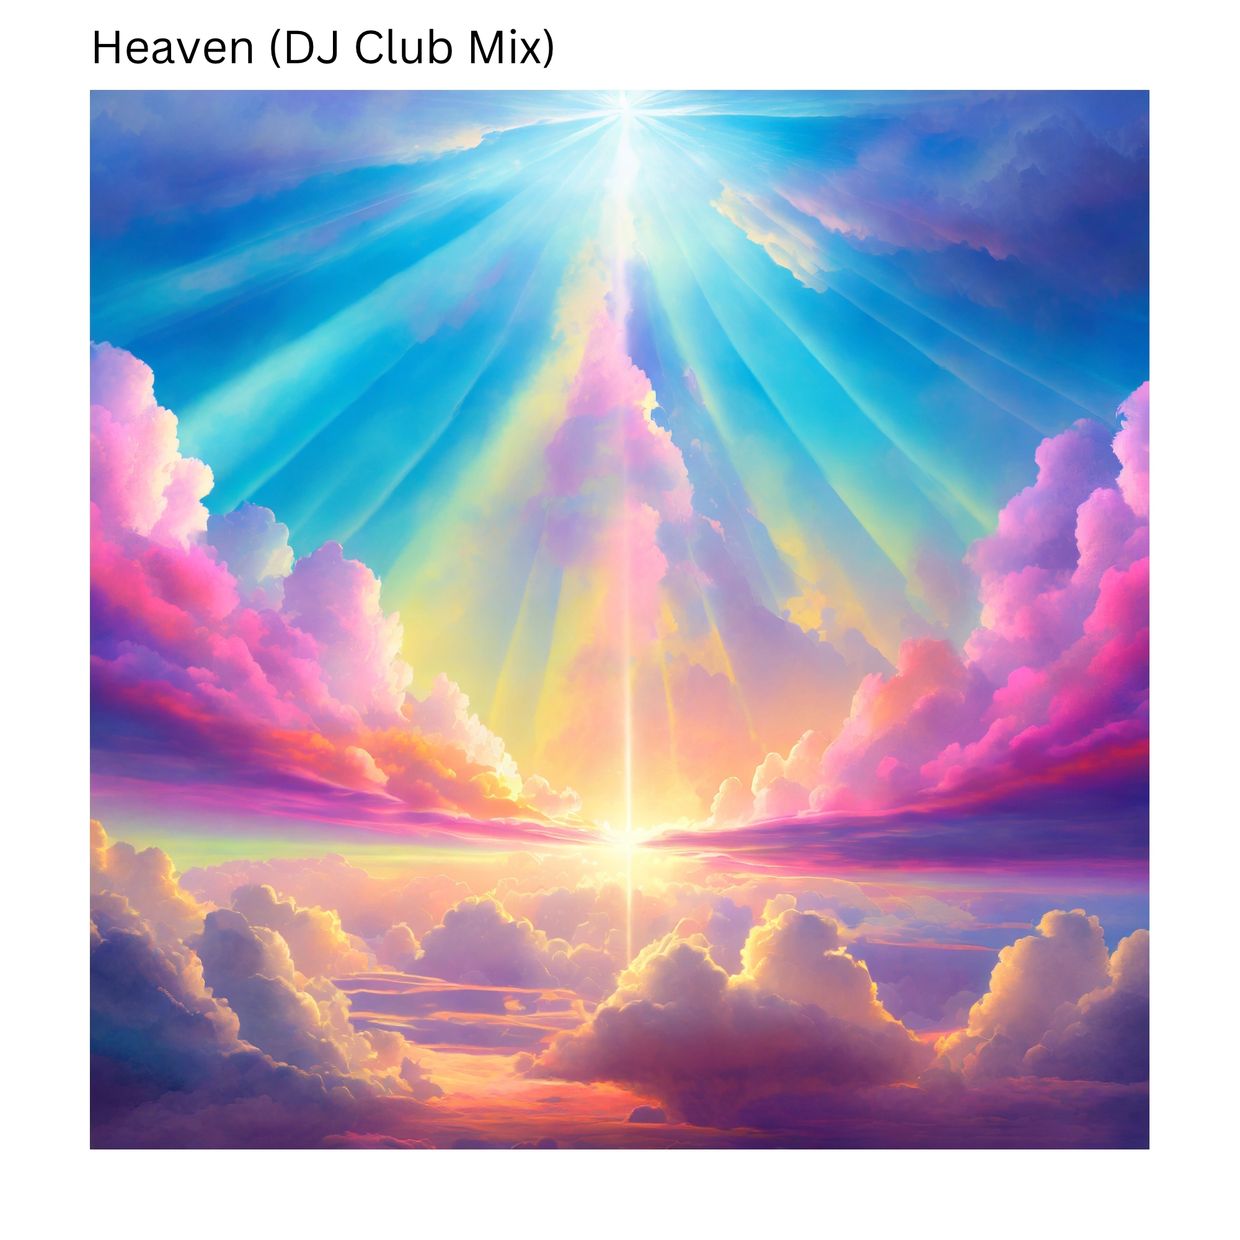 Heaven (DJ Club Mix)
New Music 
Dance Music